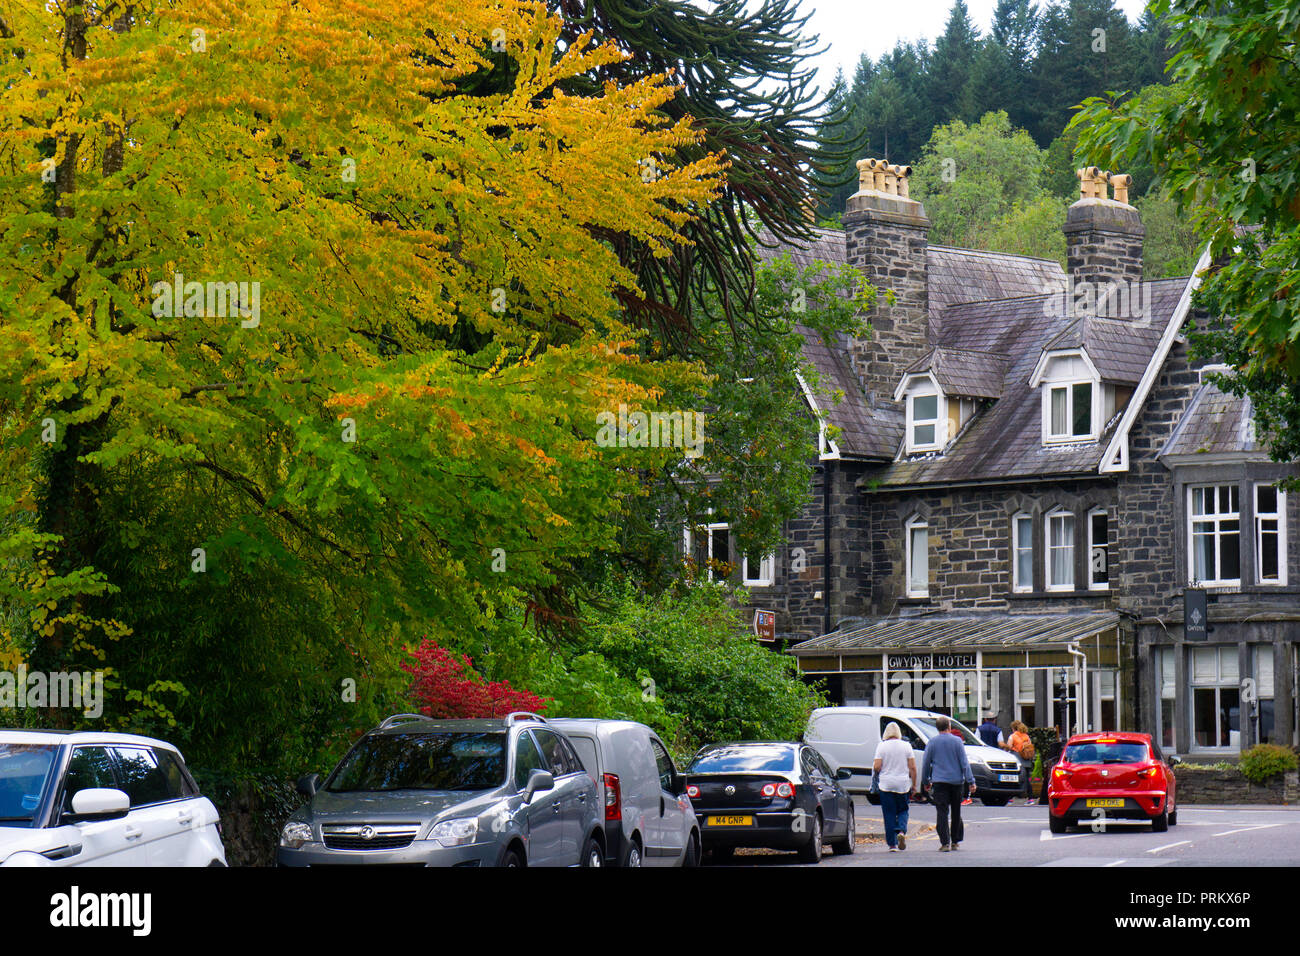 Il Gwydir Hotel a Holyhead Road, Betws-y-Coed, Gwynedd. Una bella villiage in Snowdonia. Immagine presa nel settembre 2018. Foto Stock